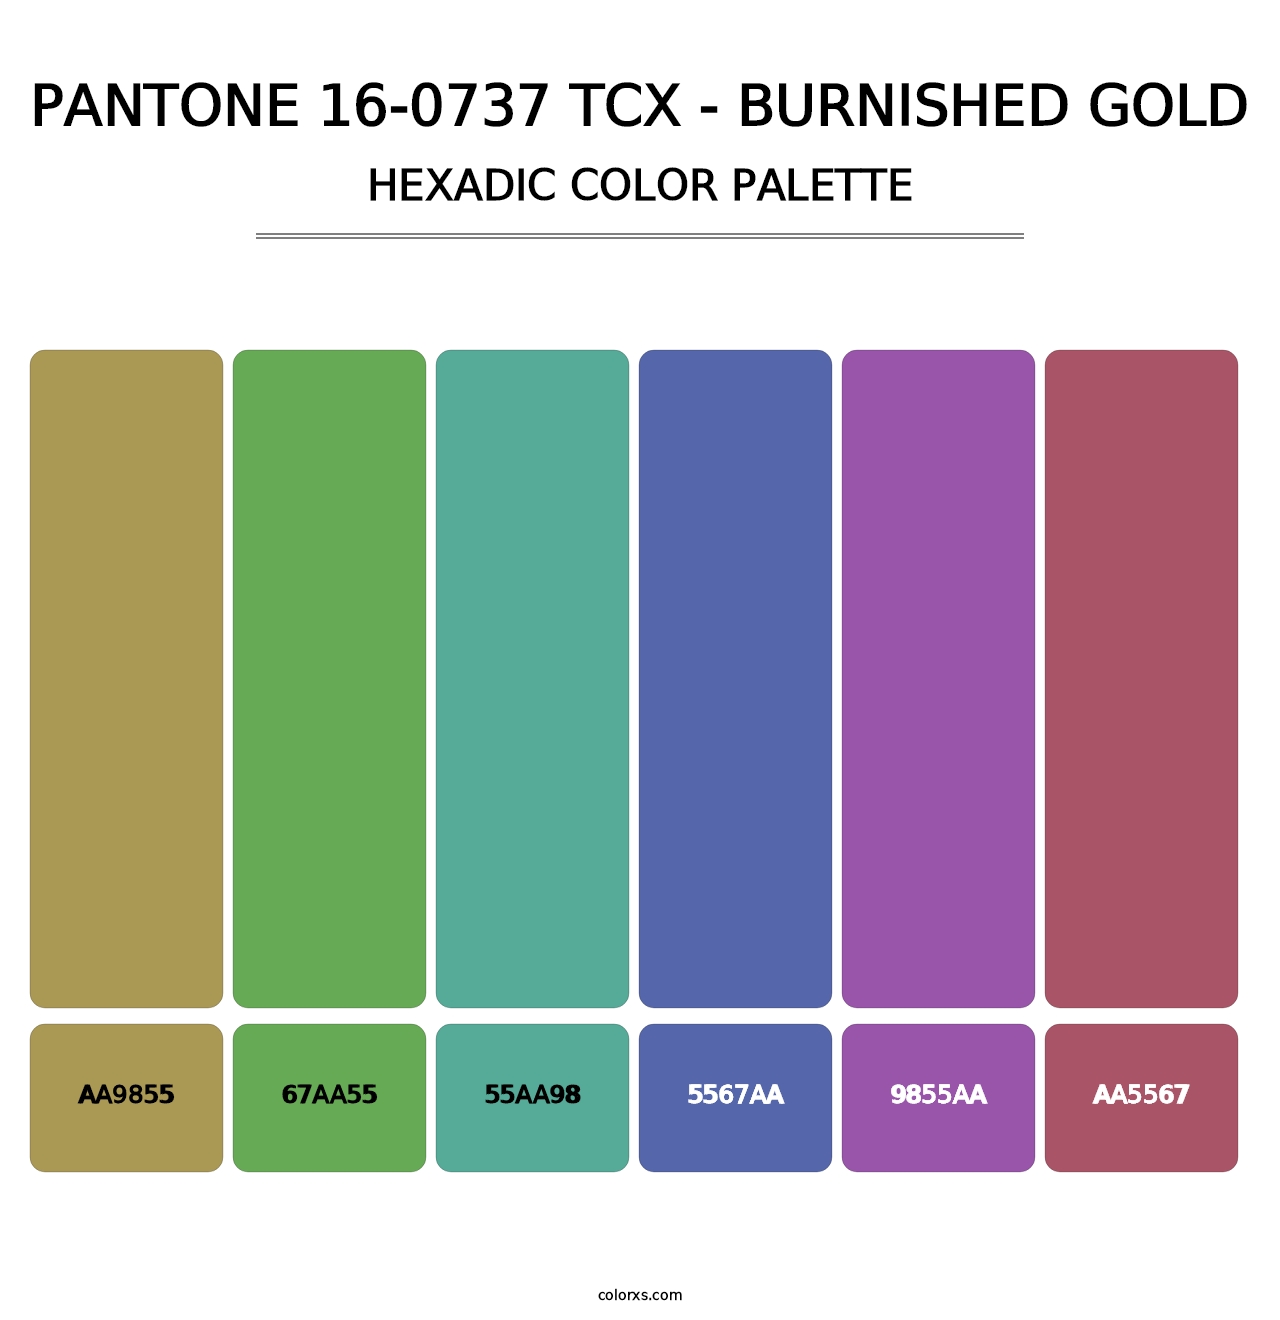 PANTONE 16-0737 TCX - Burnished Gold - Hexadic Color Palette